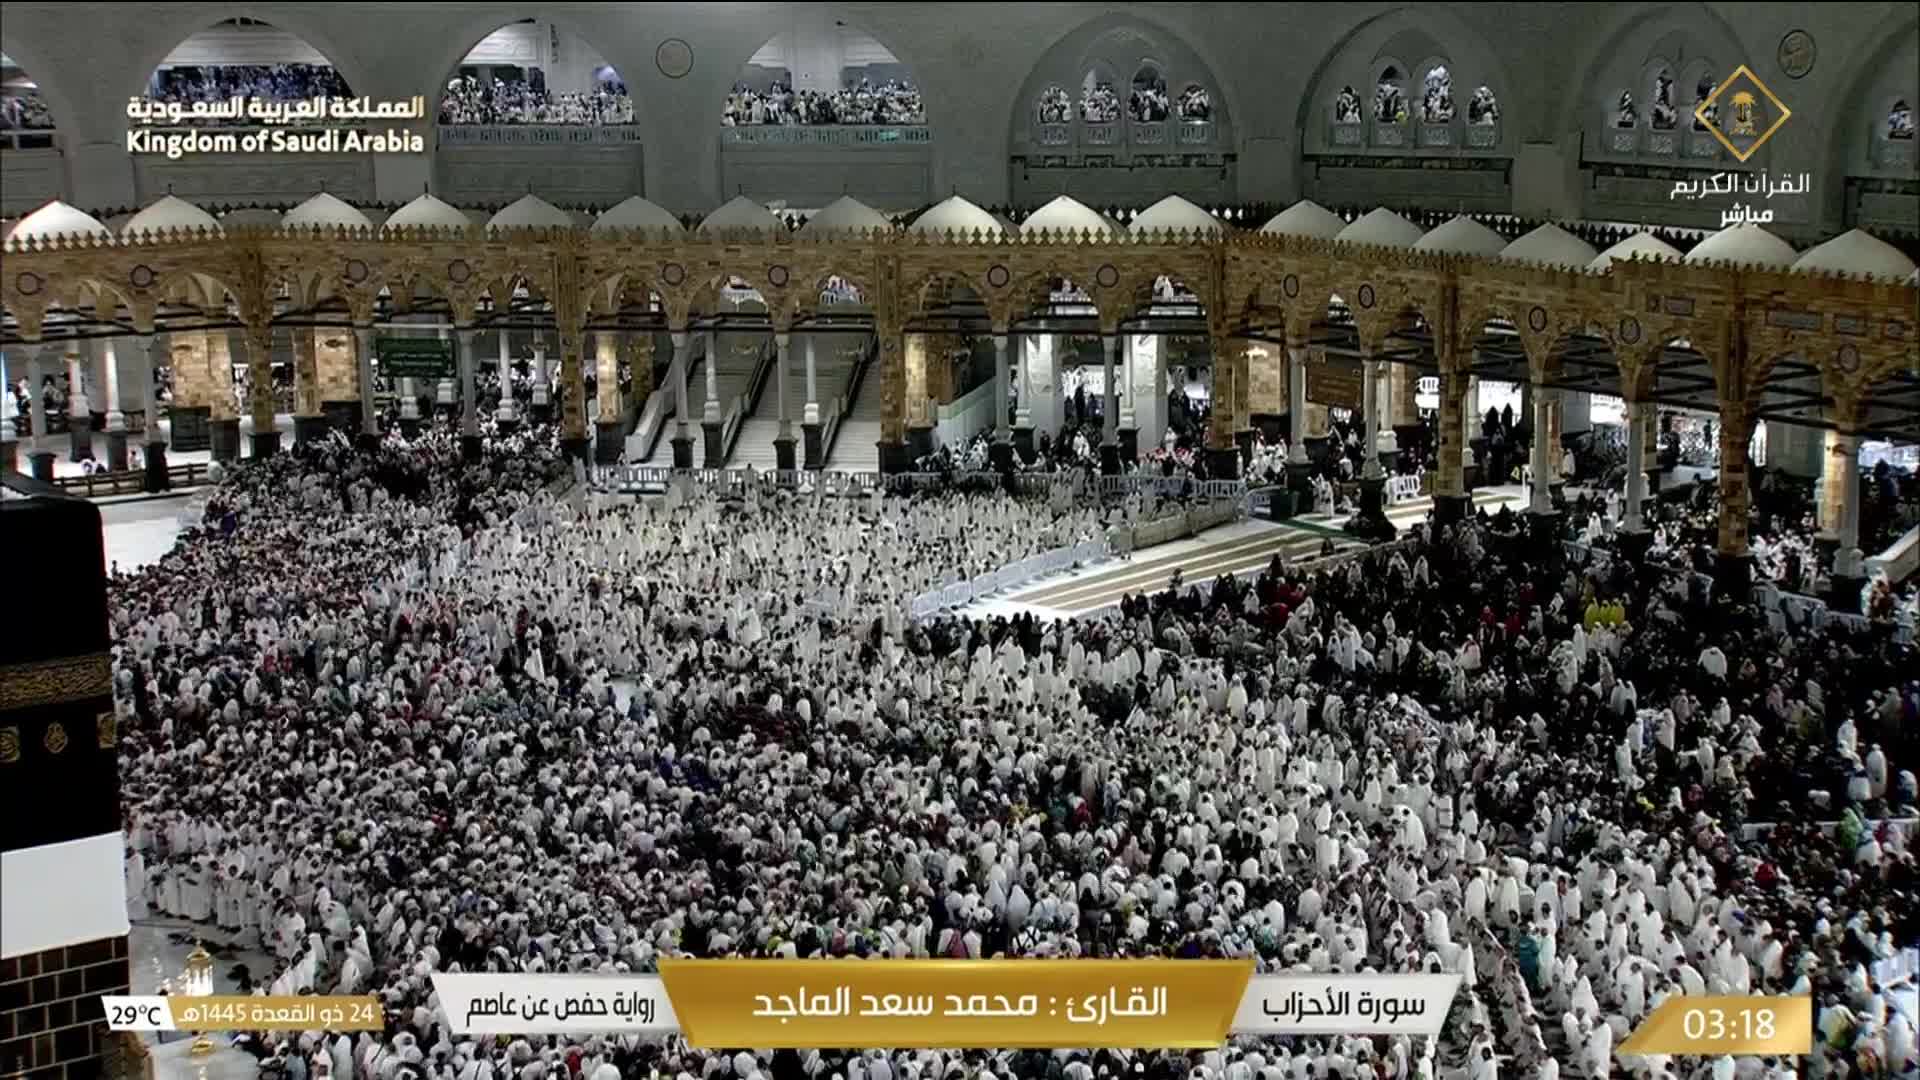 La Mecca Mer. 03:36